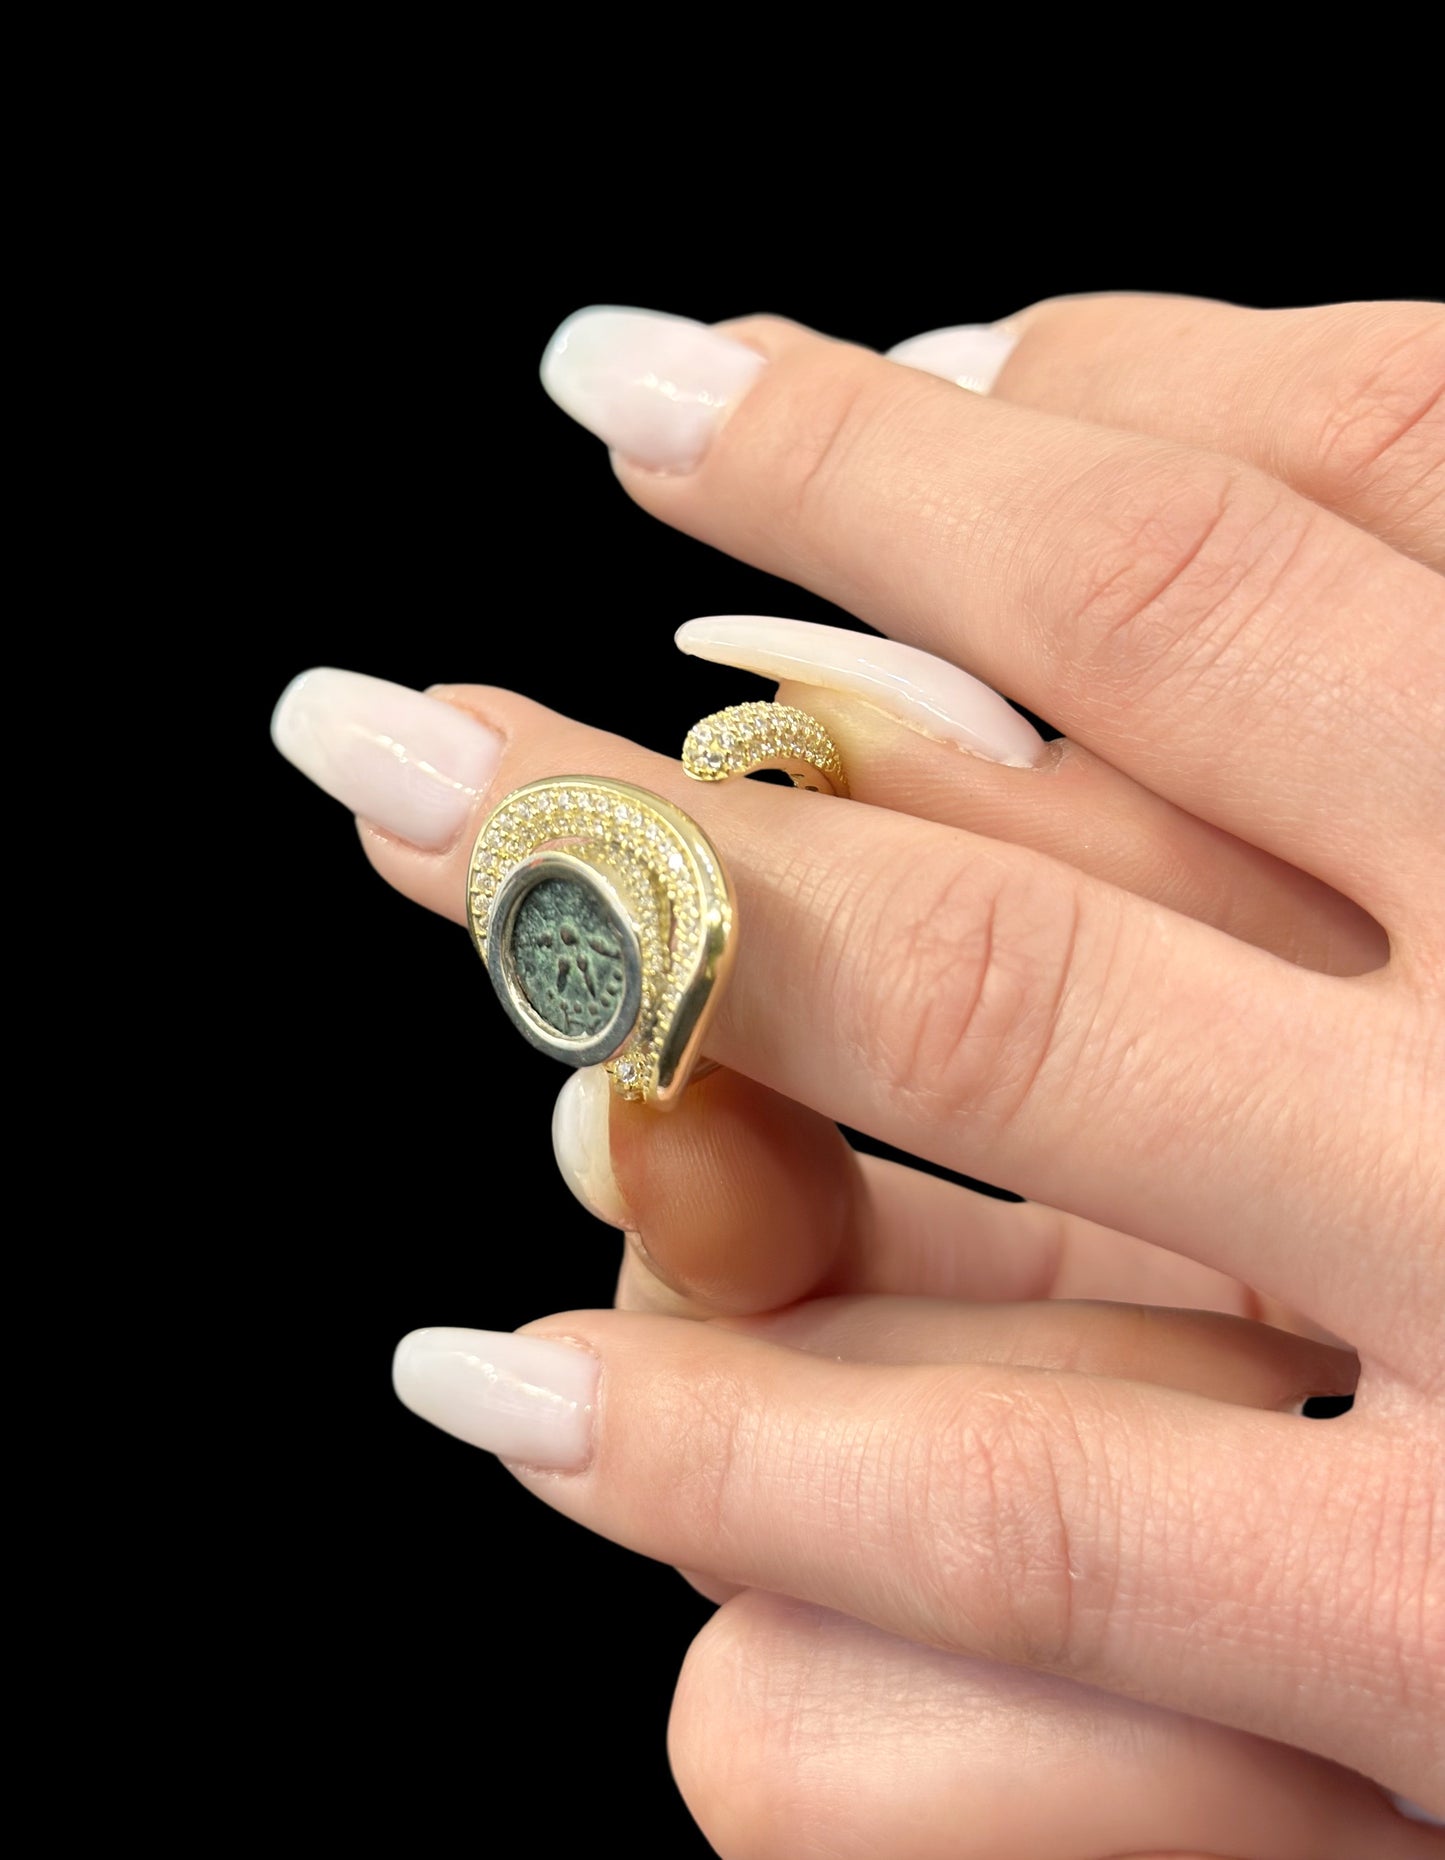 Ancient Widow’s Mite Jewish Maccabean Coin Set in 14k Gold Ring